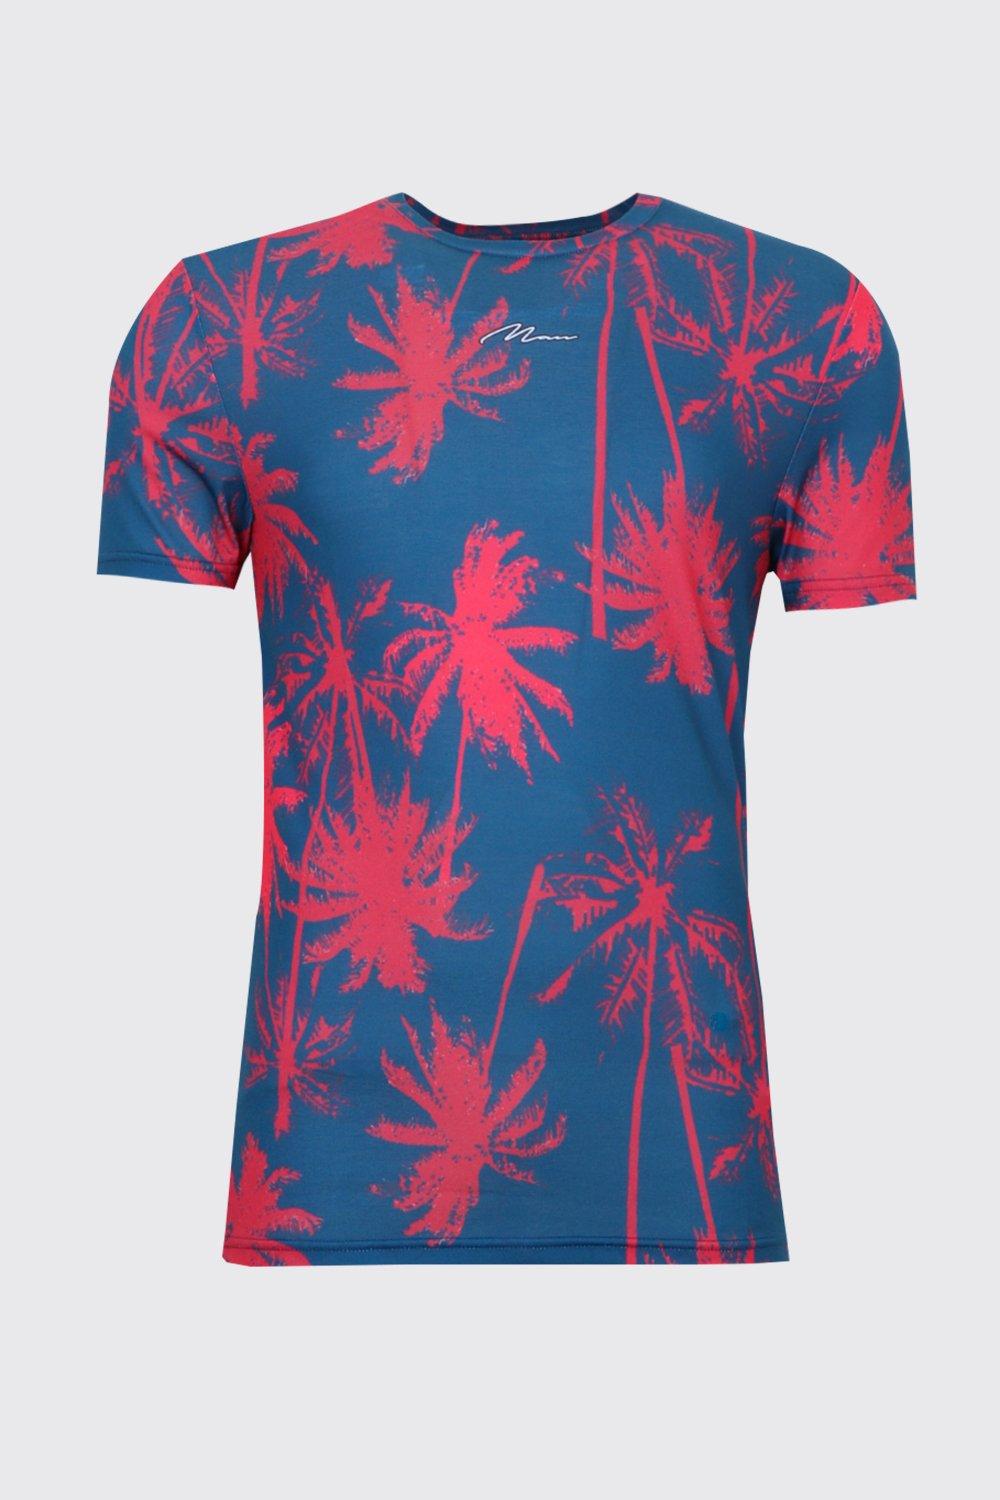 red palm tree shirt